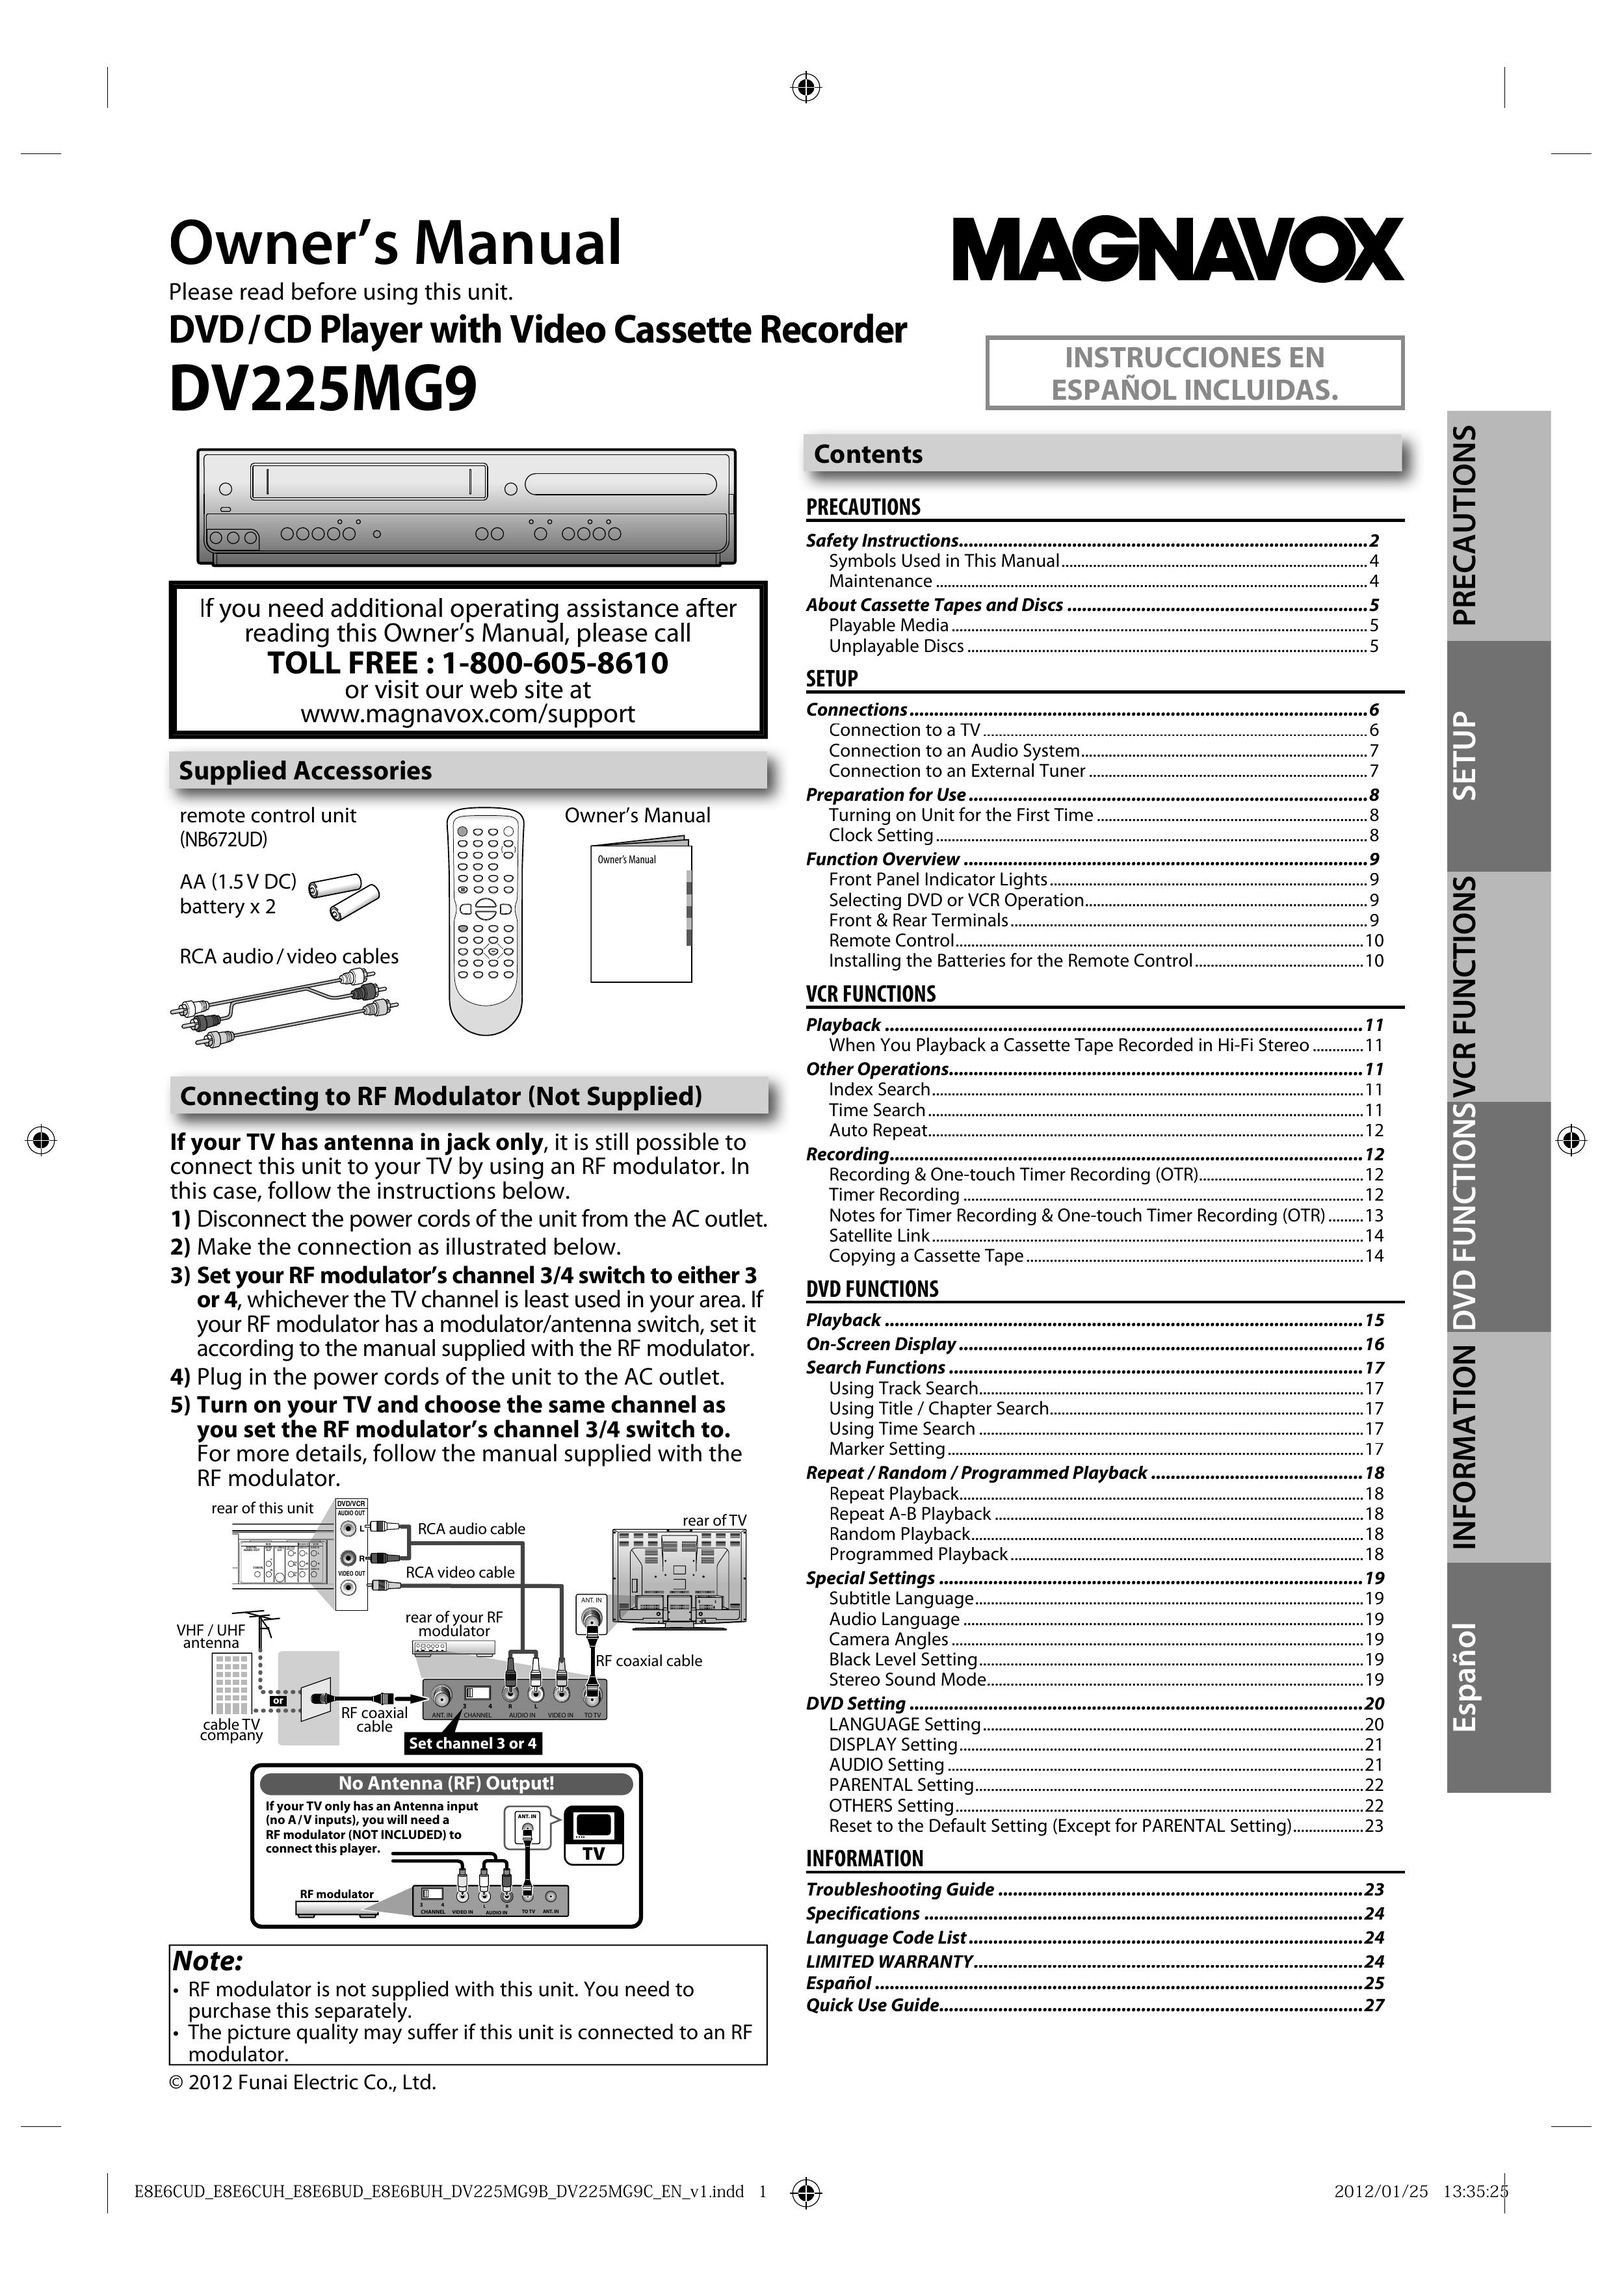 Magnavox DV225MG9 DVD Player User Manual